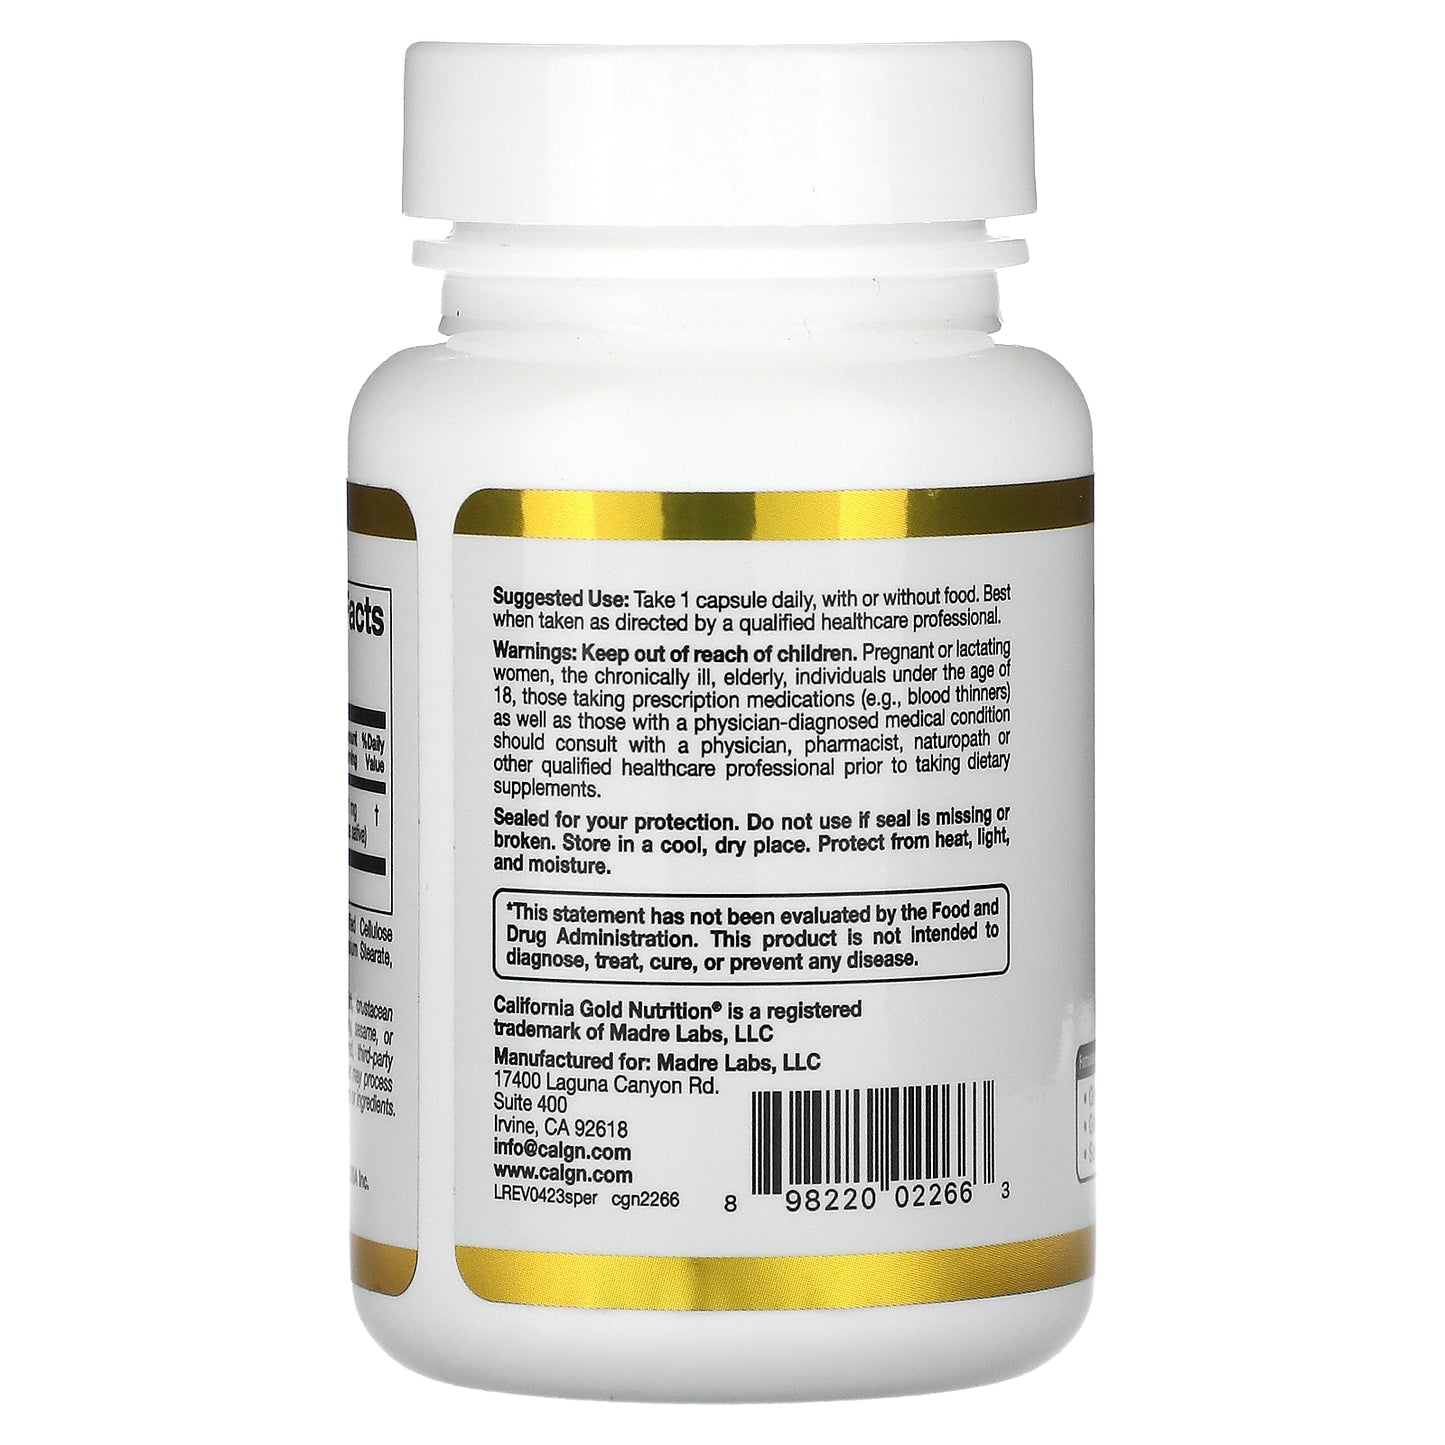 California Gold Nutrition, Spermidine, Rice Germ Extract, 1 mg, 30 Veggie Capsules